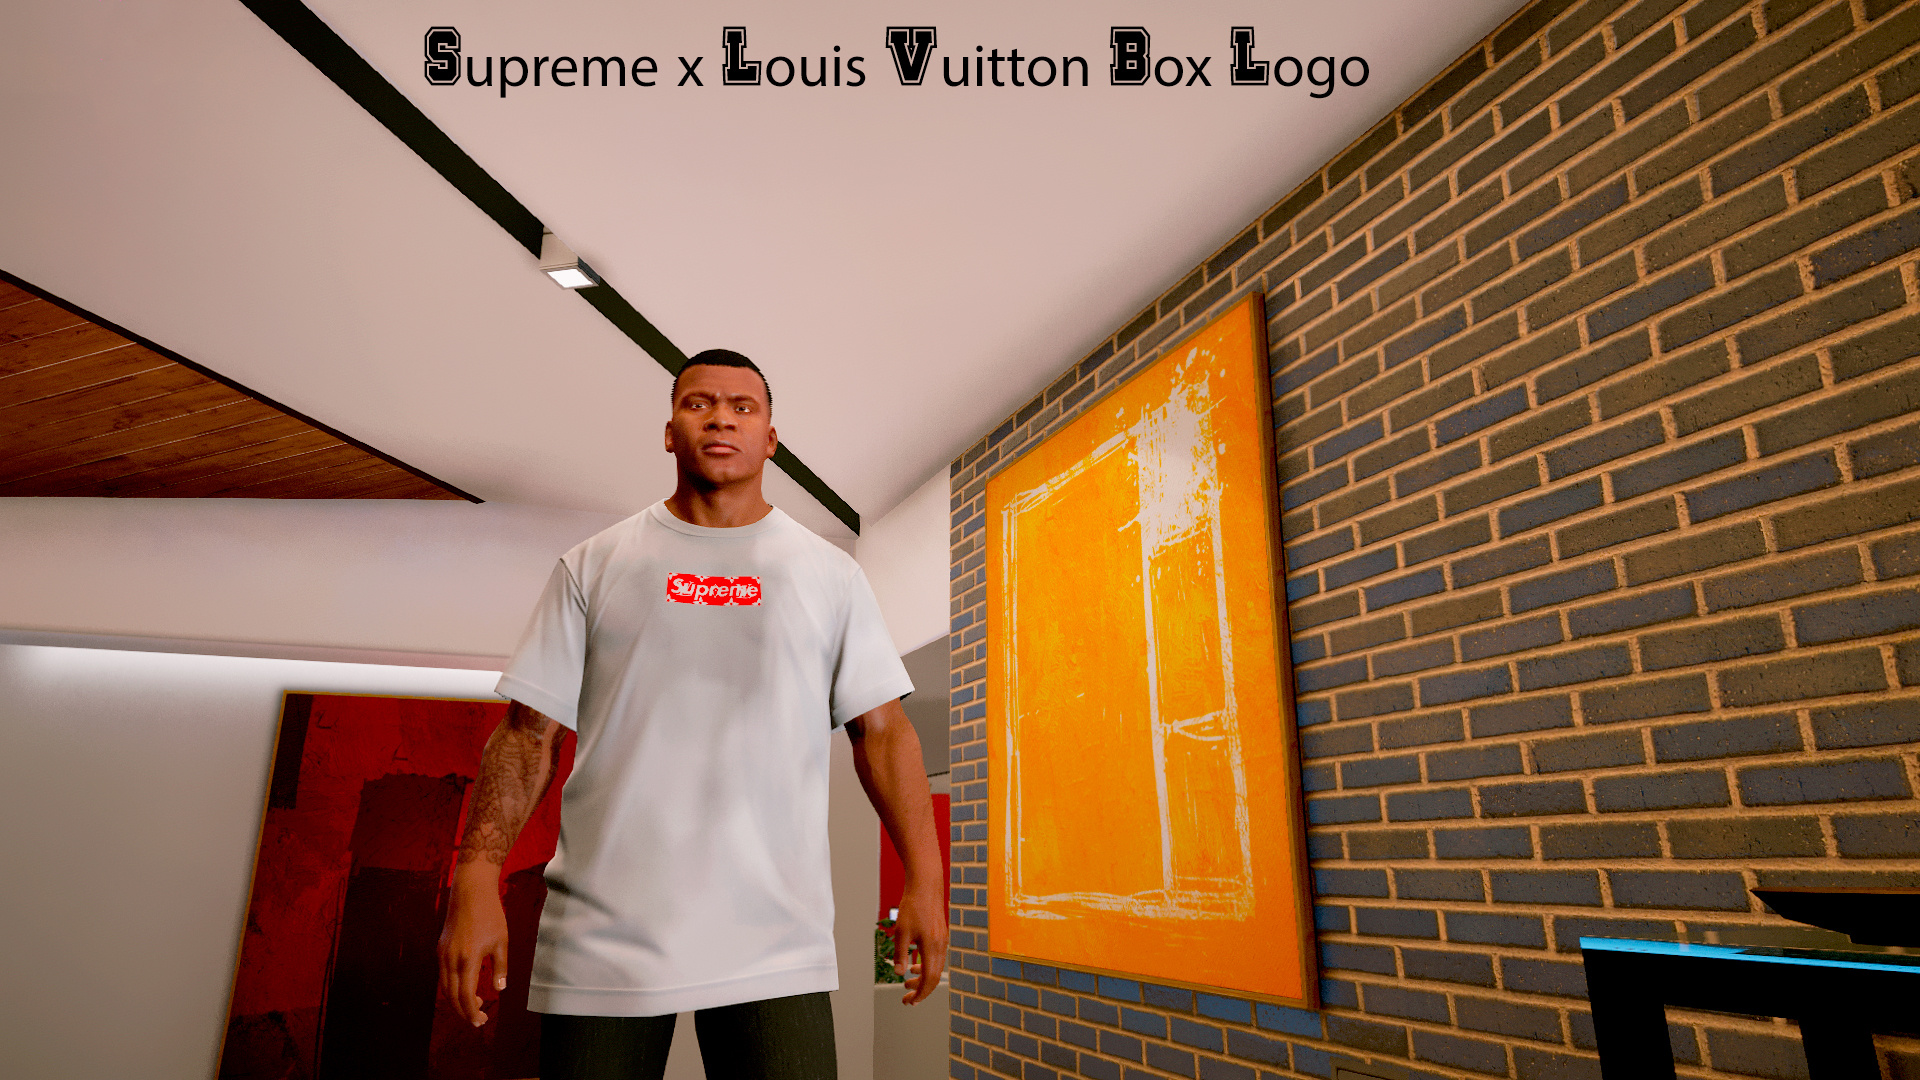 Supreme x Louis Vuitton Box Logo Tee for Franklin - wcy.wat.edu.pl